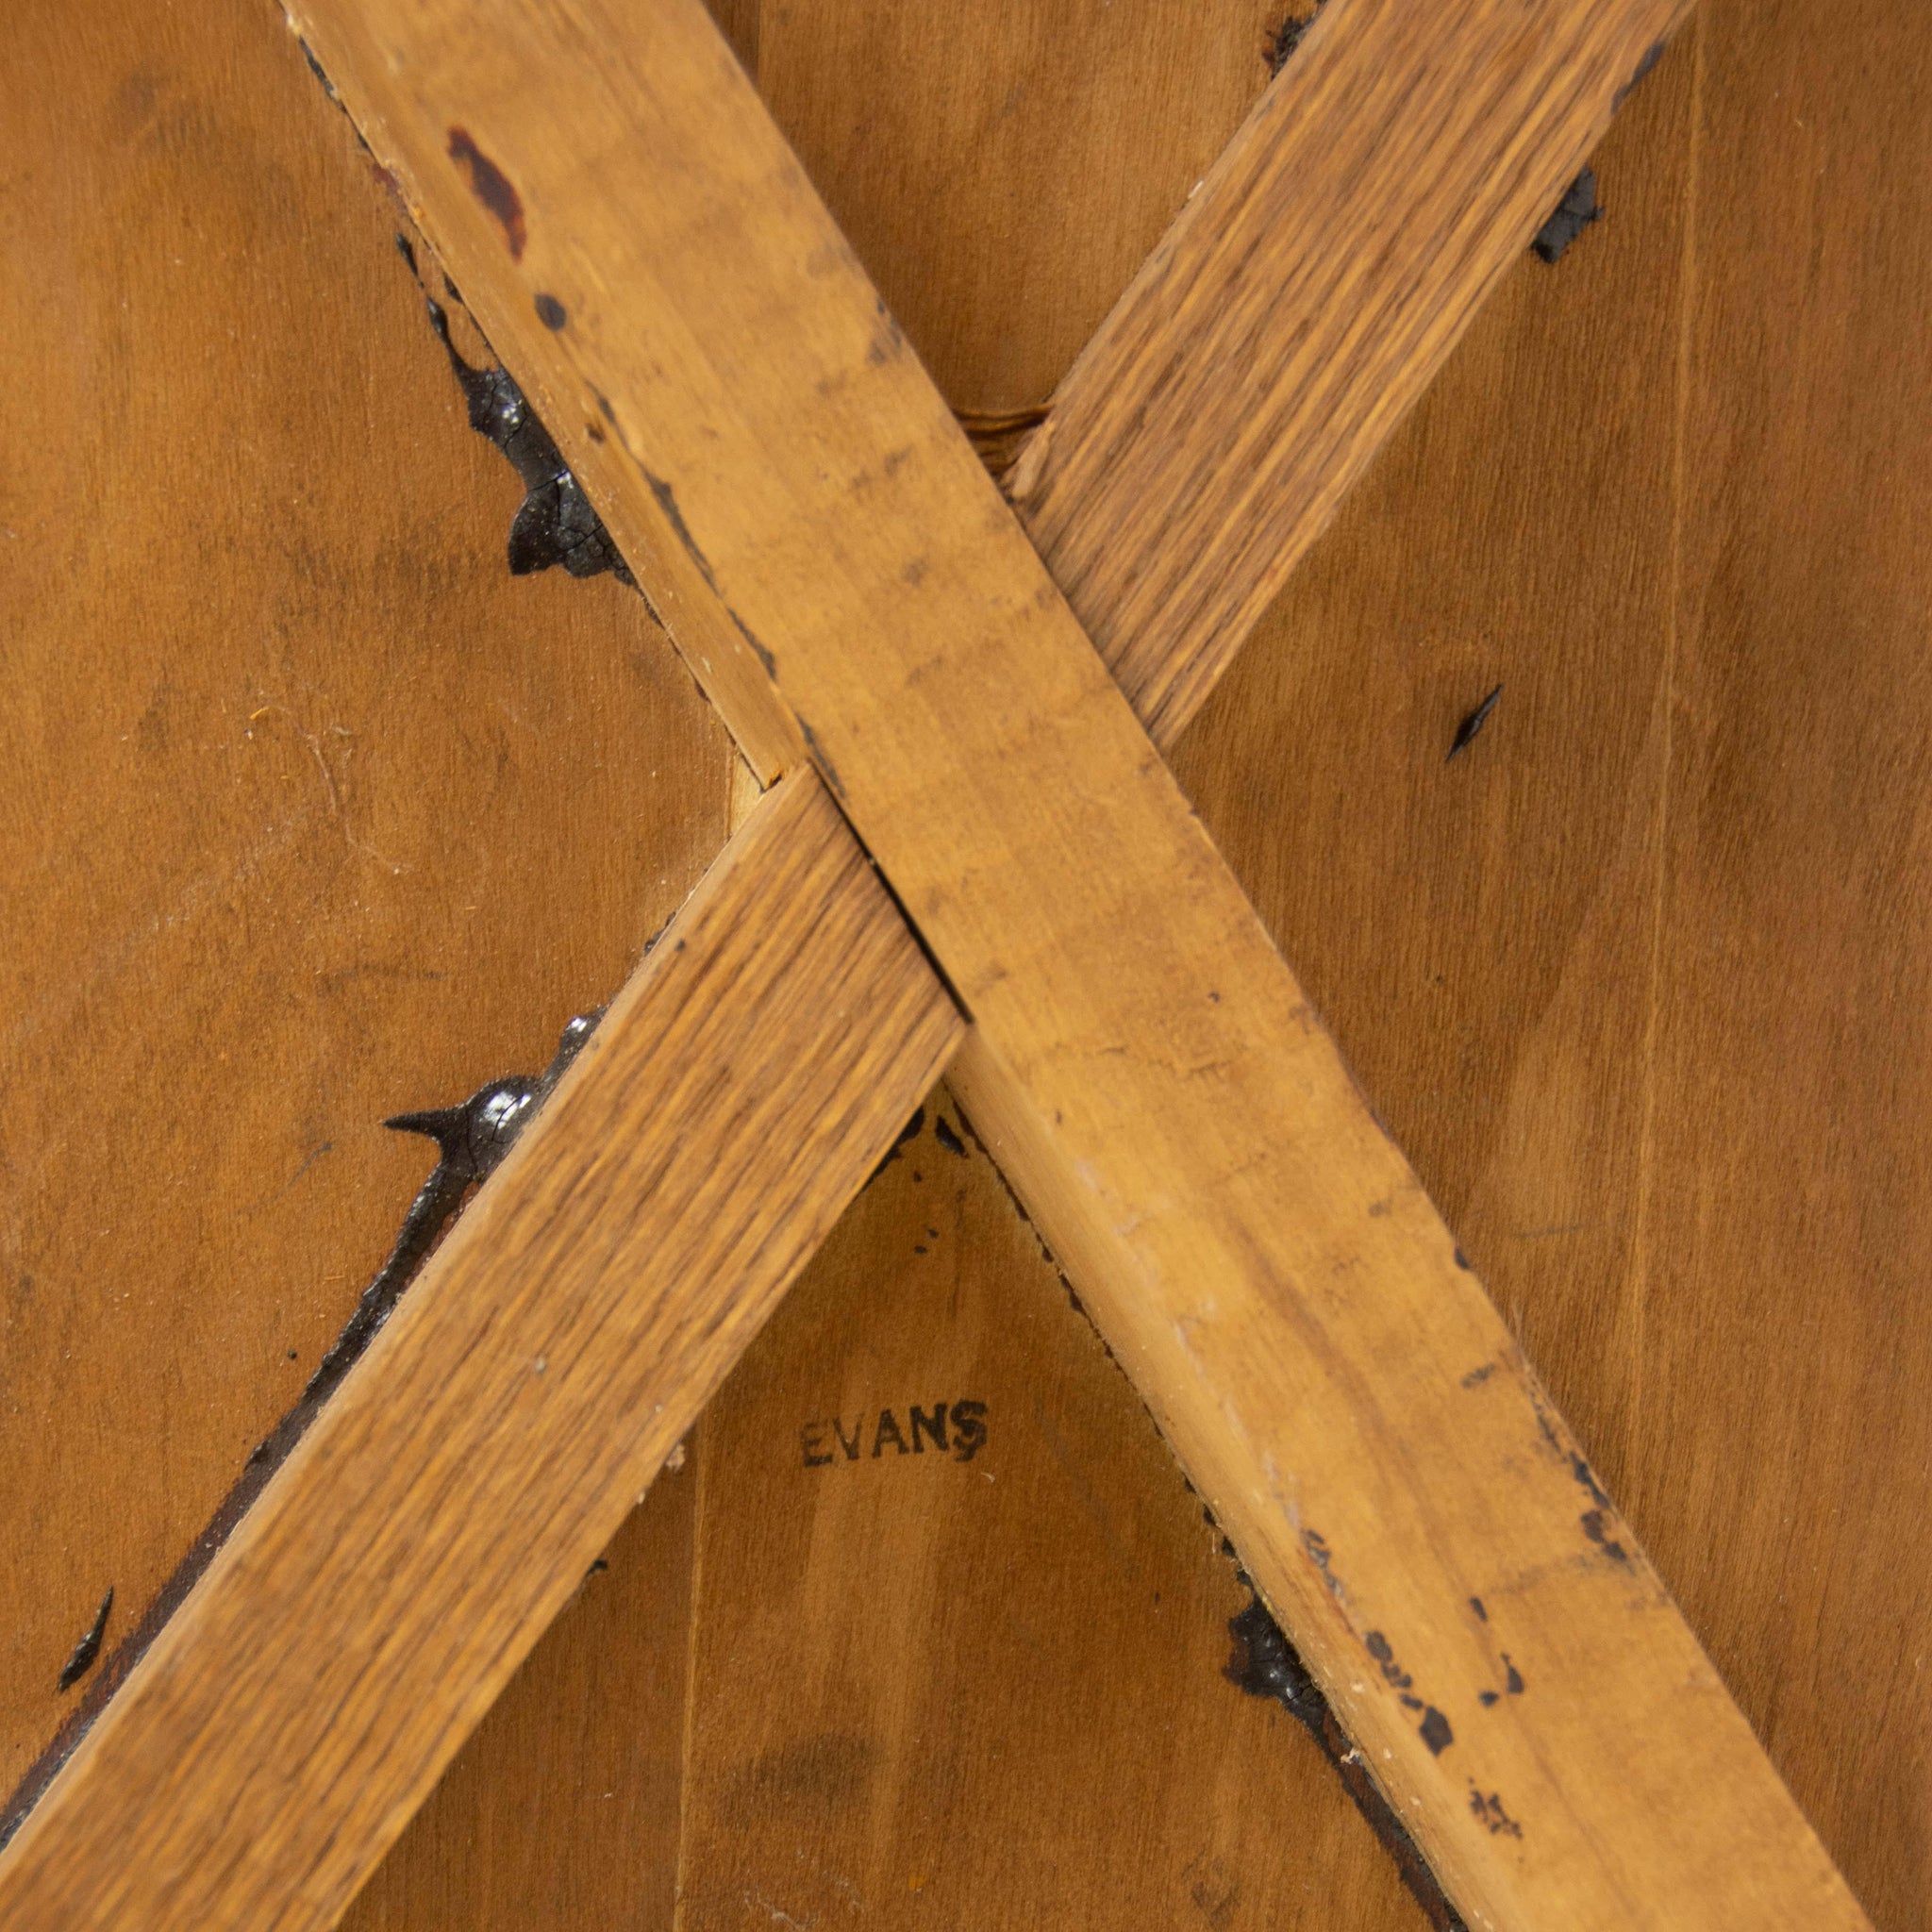 1945 Eames Evans Experimental Molded Plywood Coffee Table - Rarify Inc.